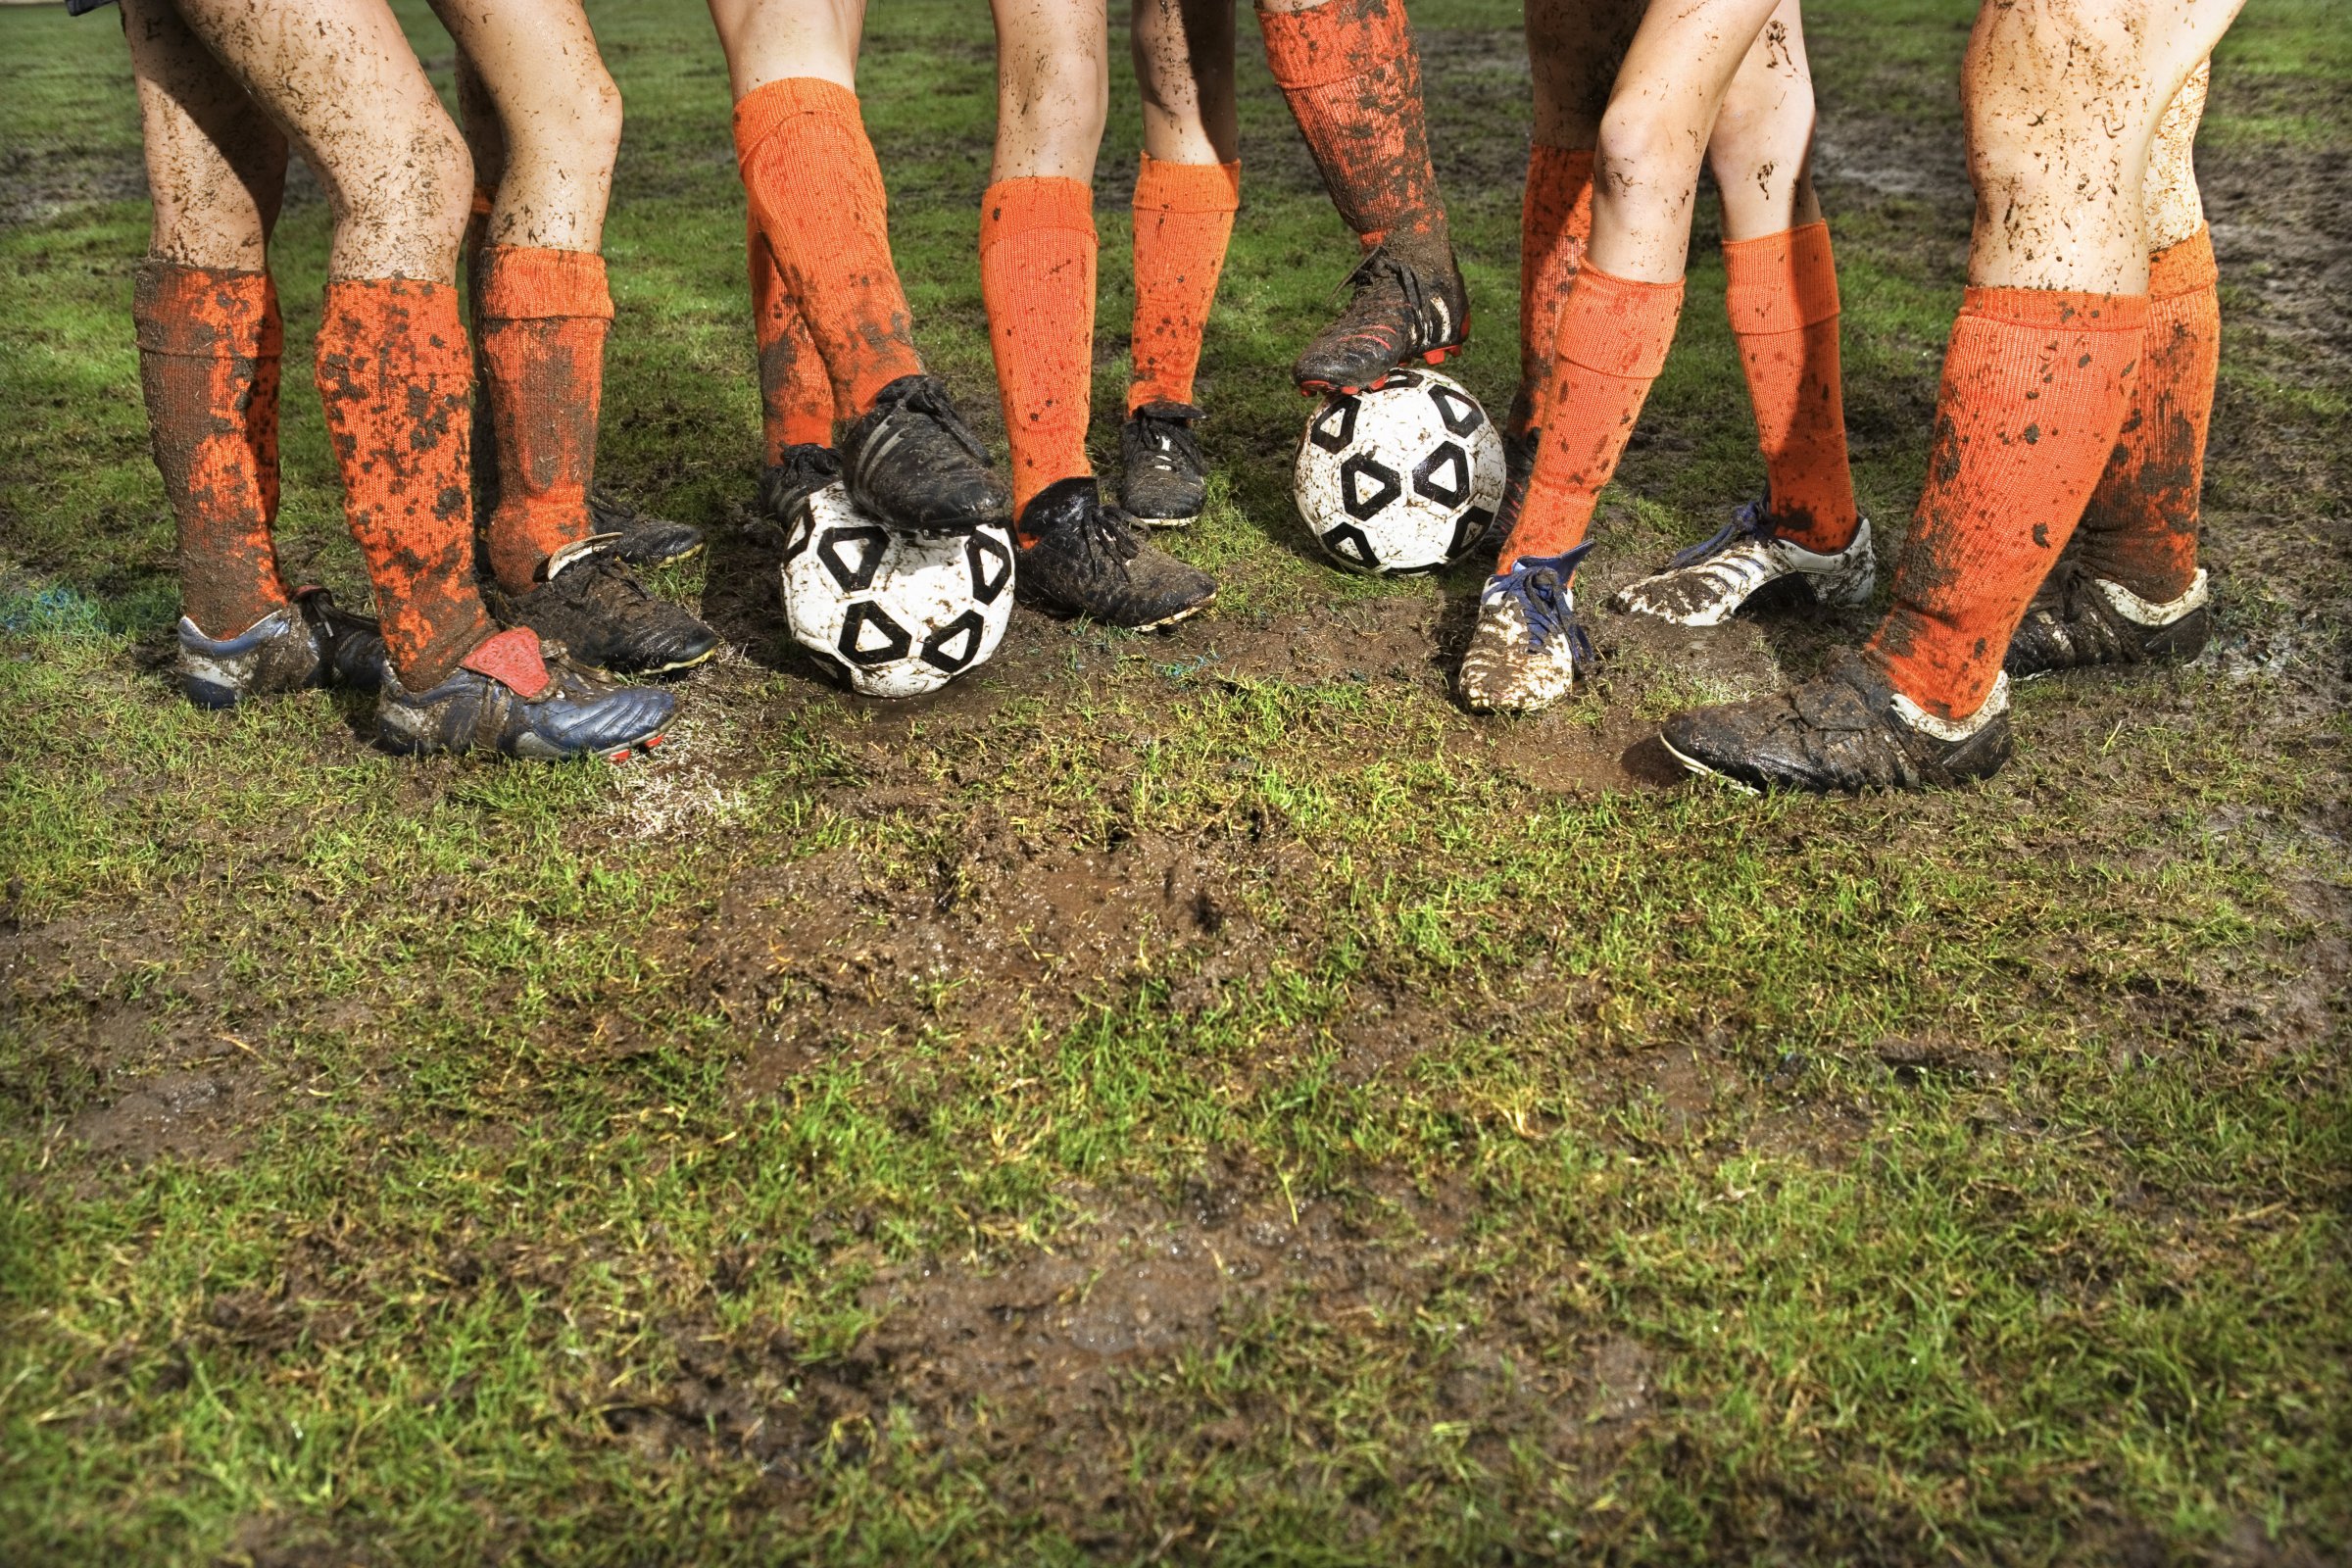 Muddy legs of soccer players